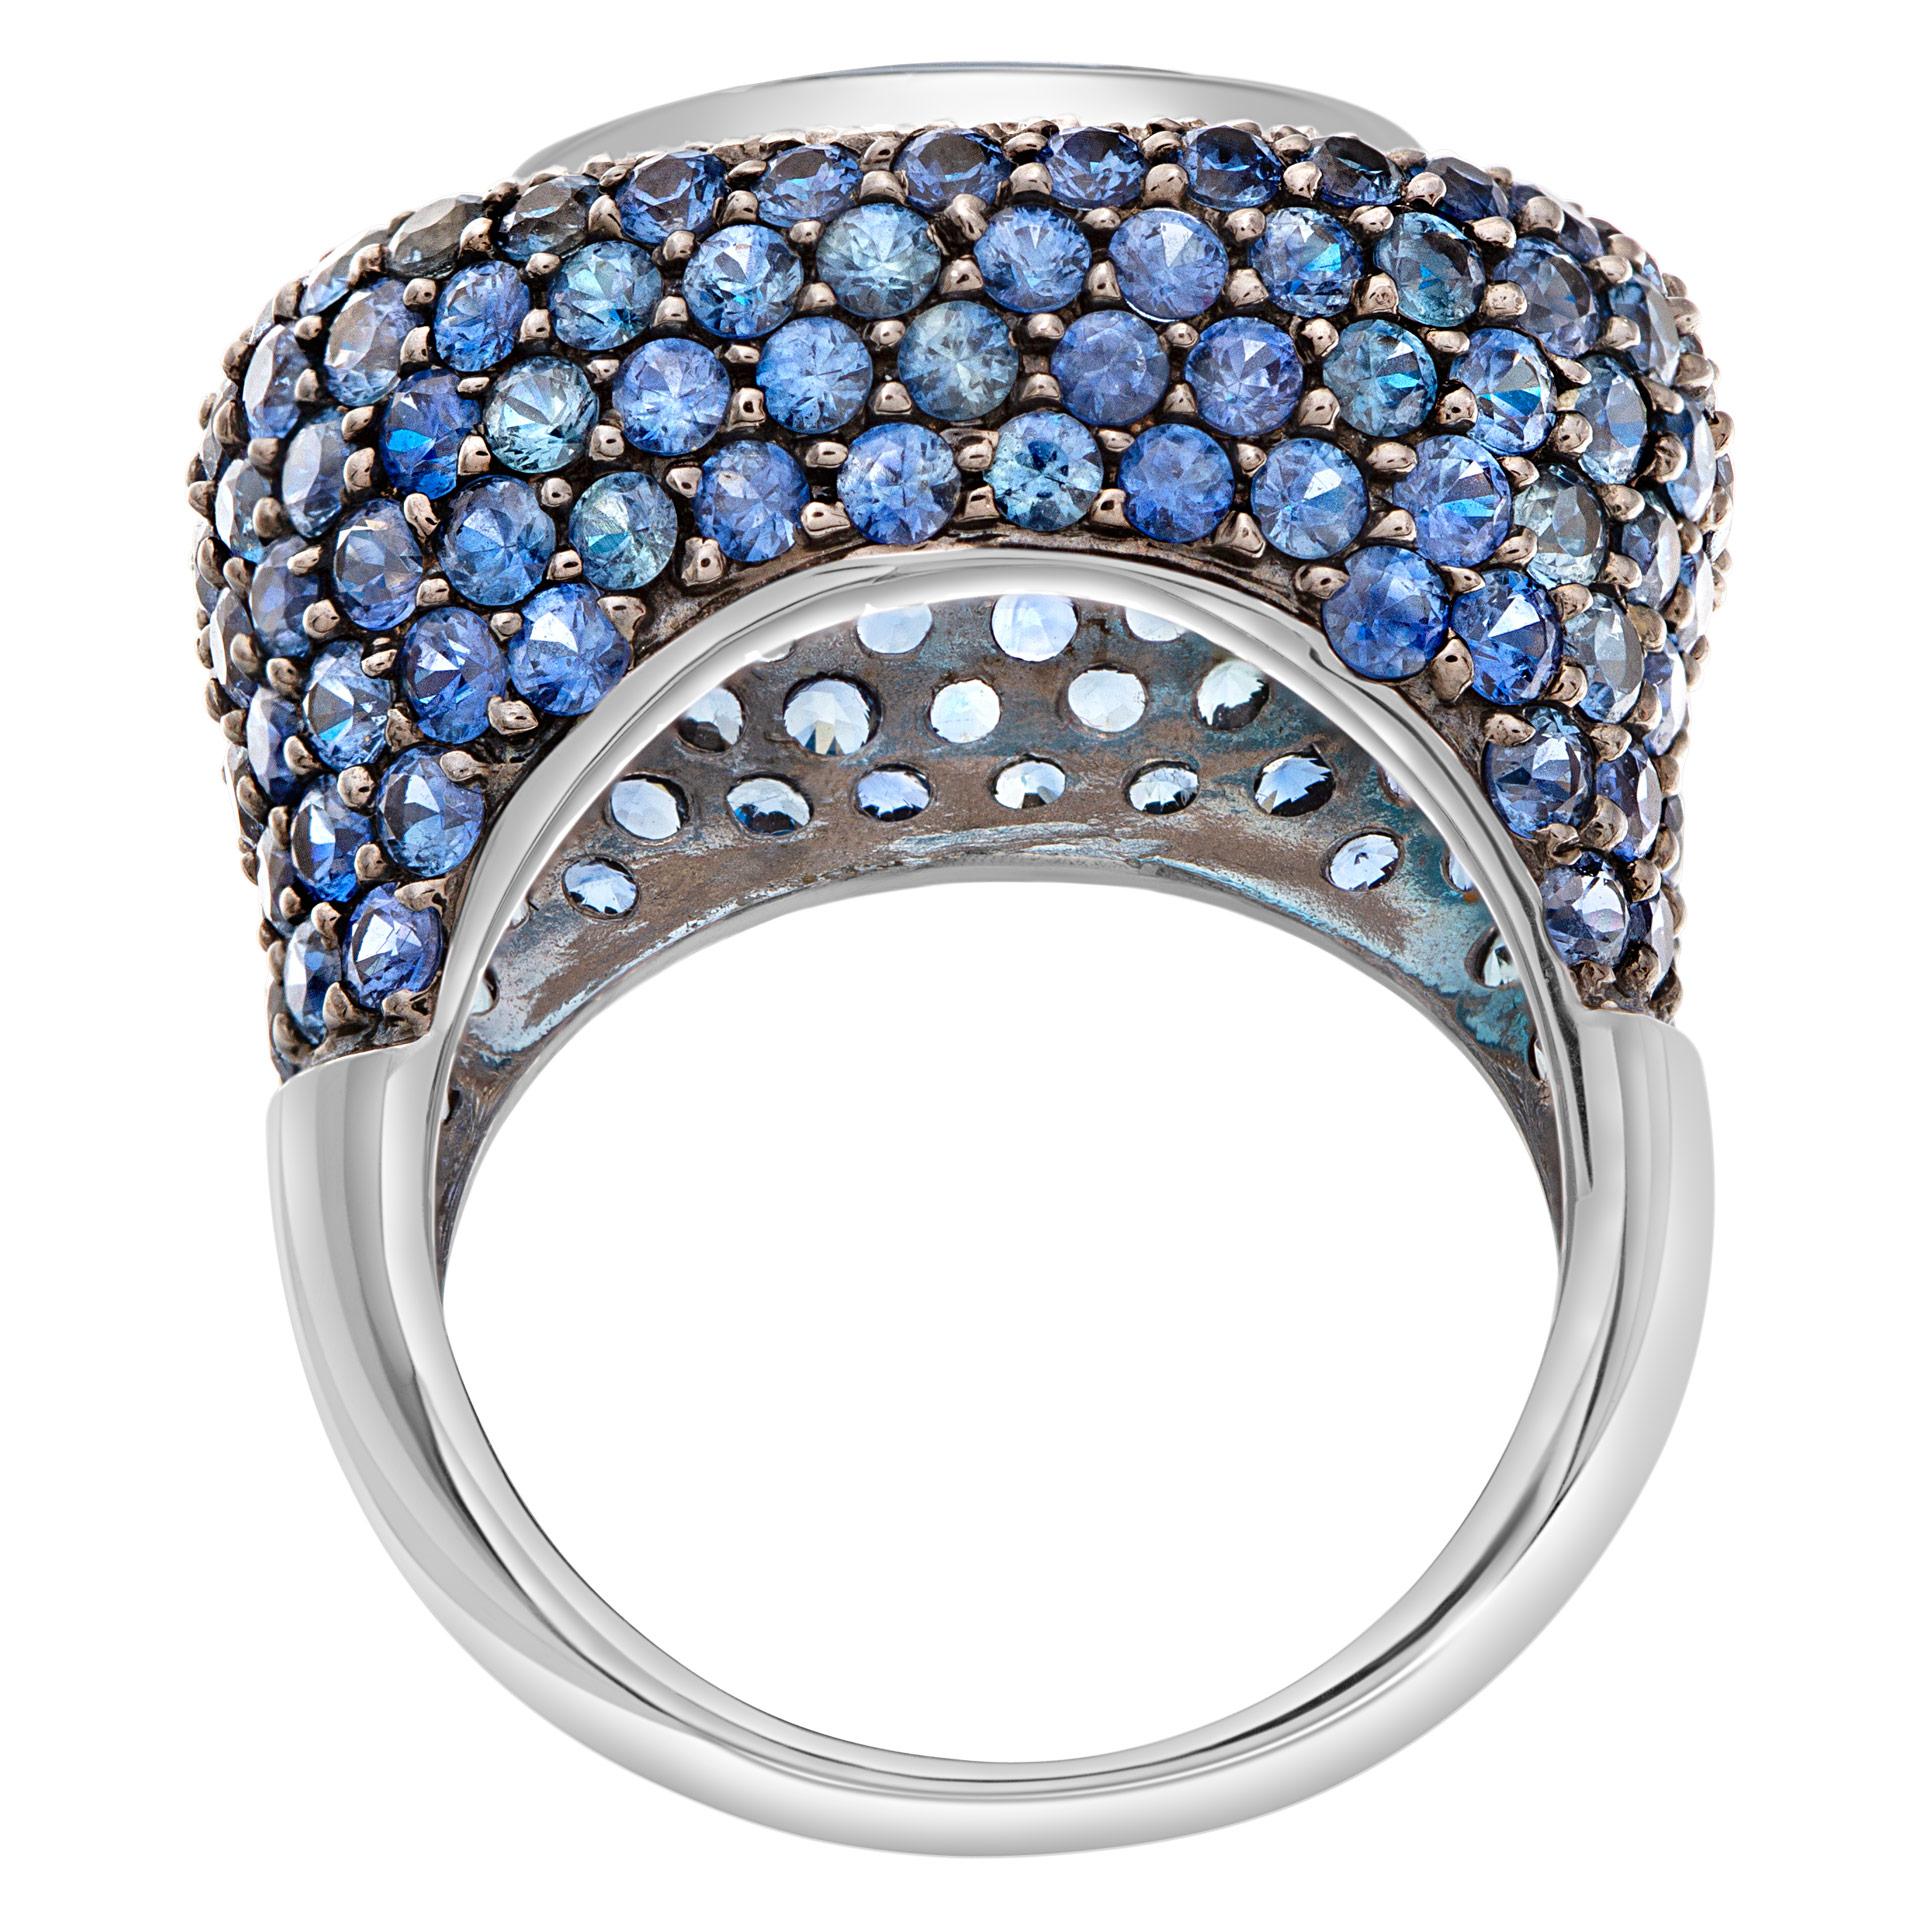 7 carat blue topaz ring